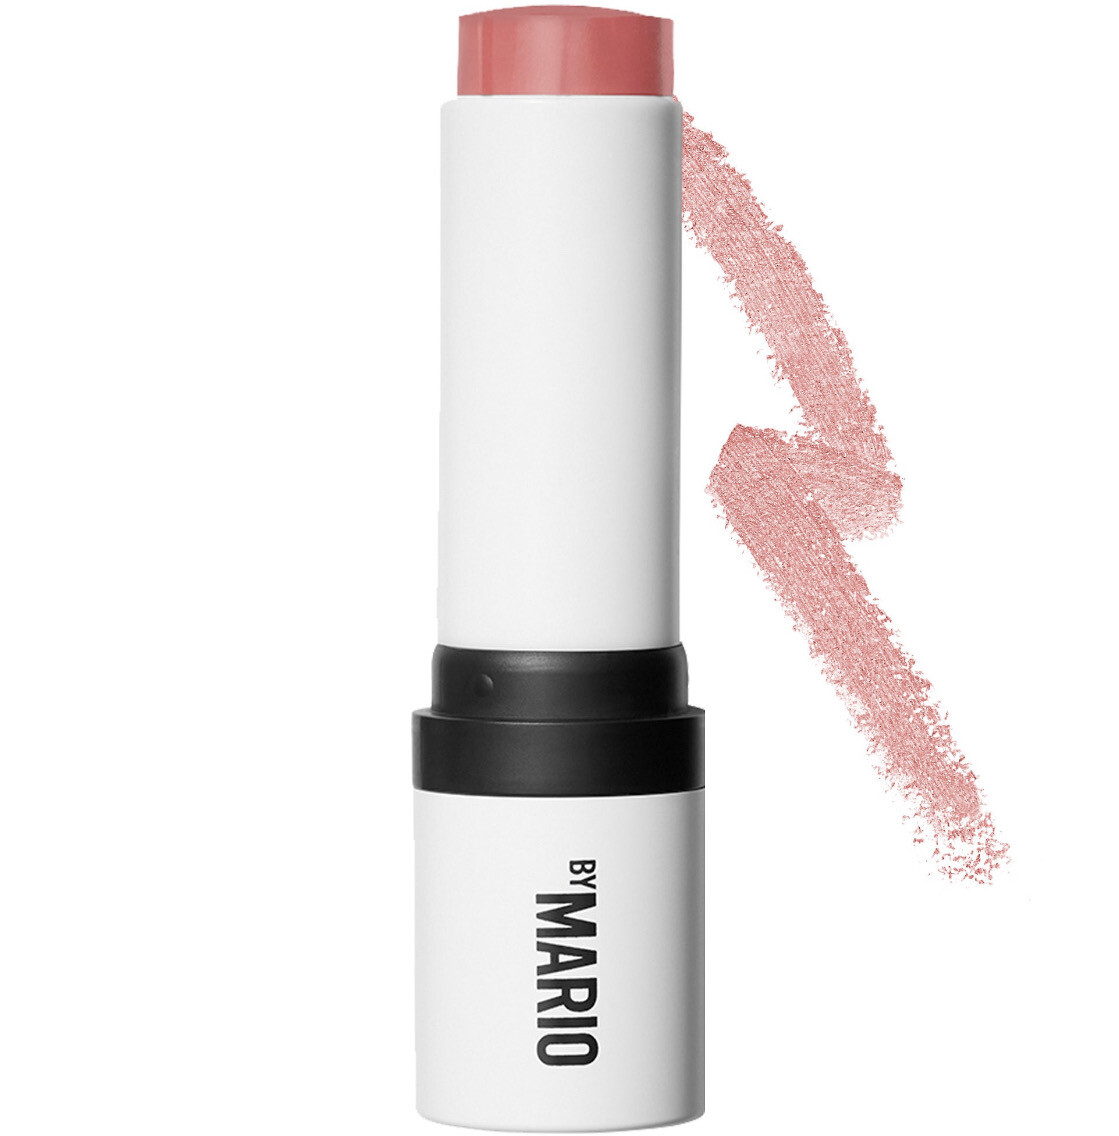 MAKEUP BY MARIO - Soft Pop Blush Stick | Pale Petal - soft pink